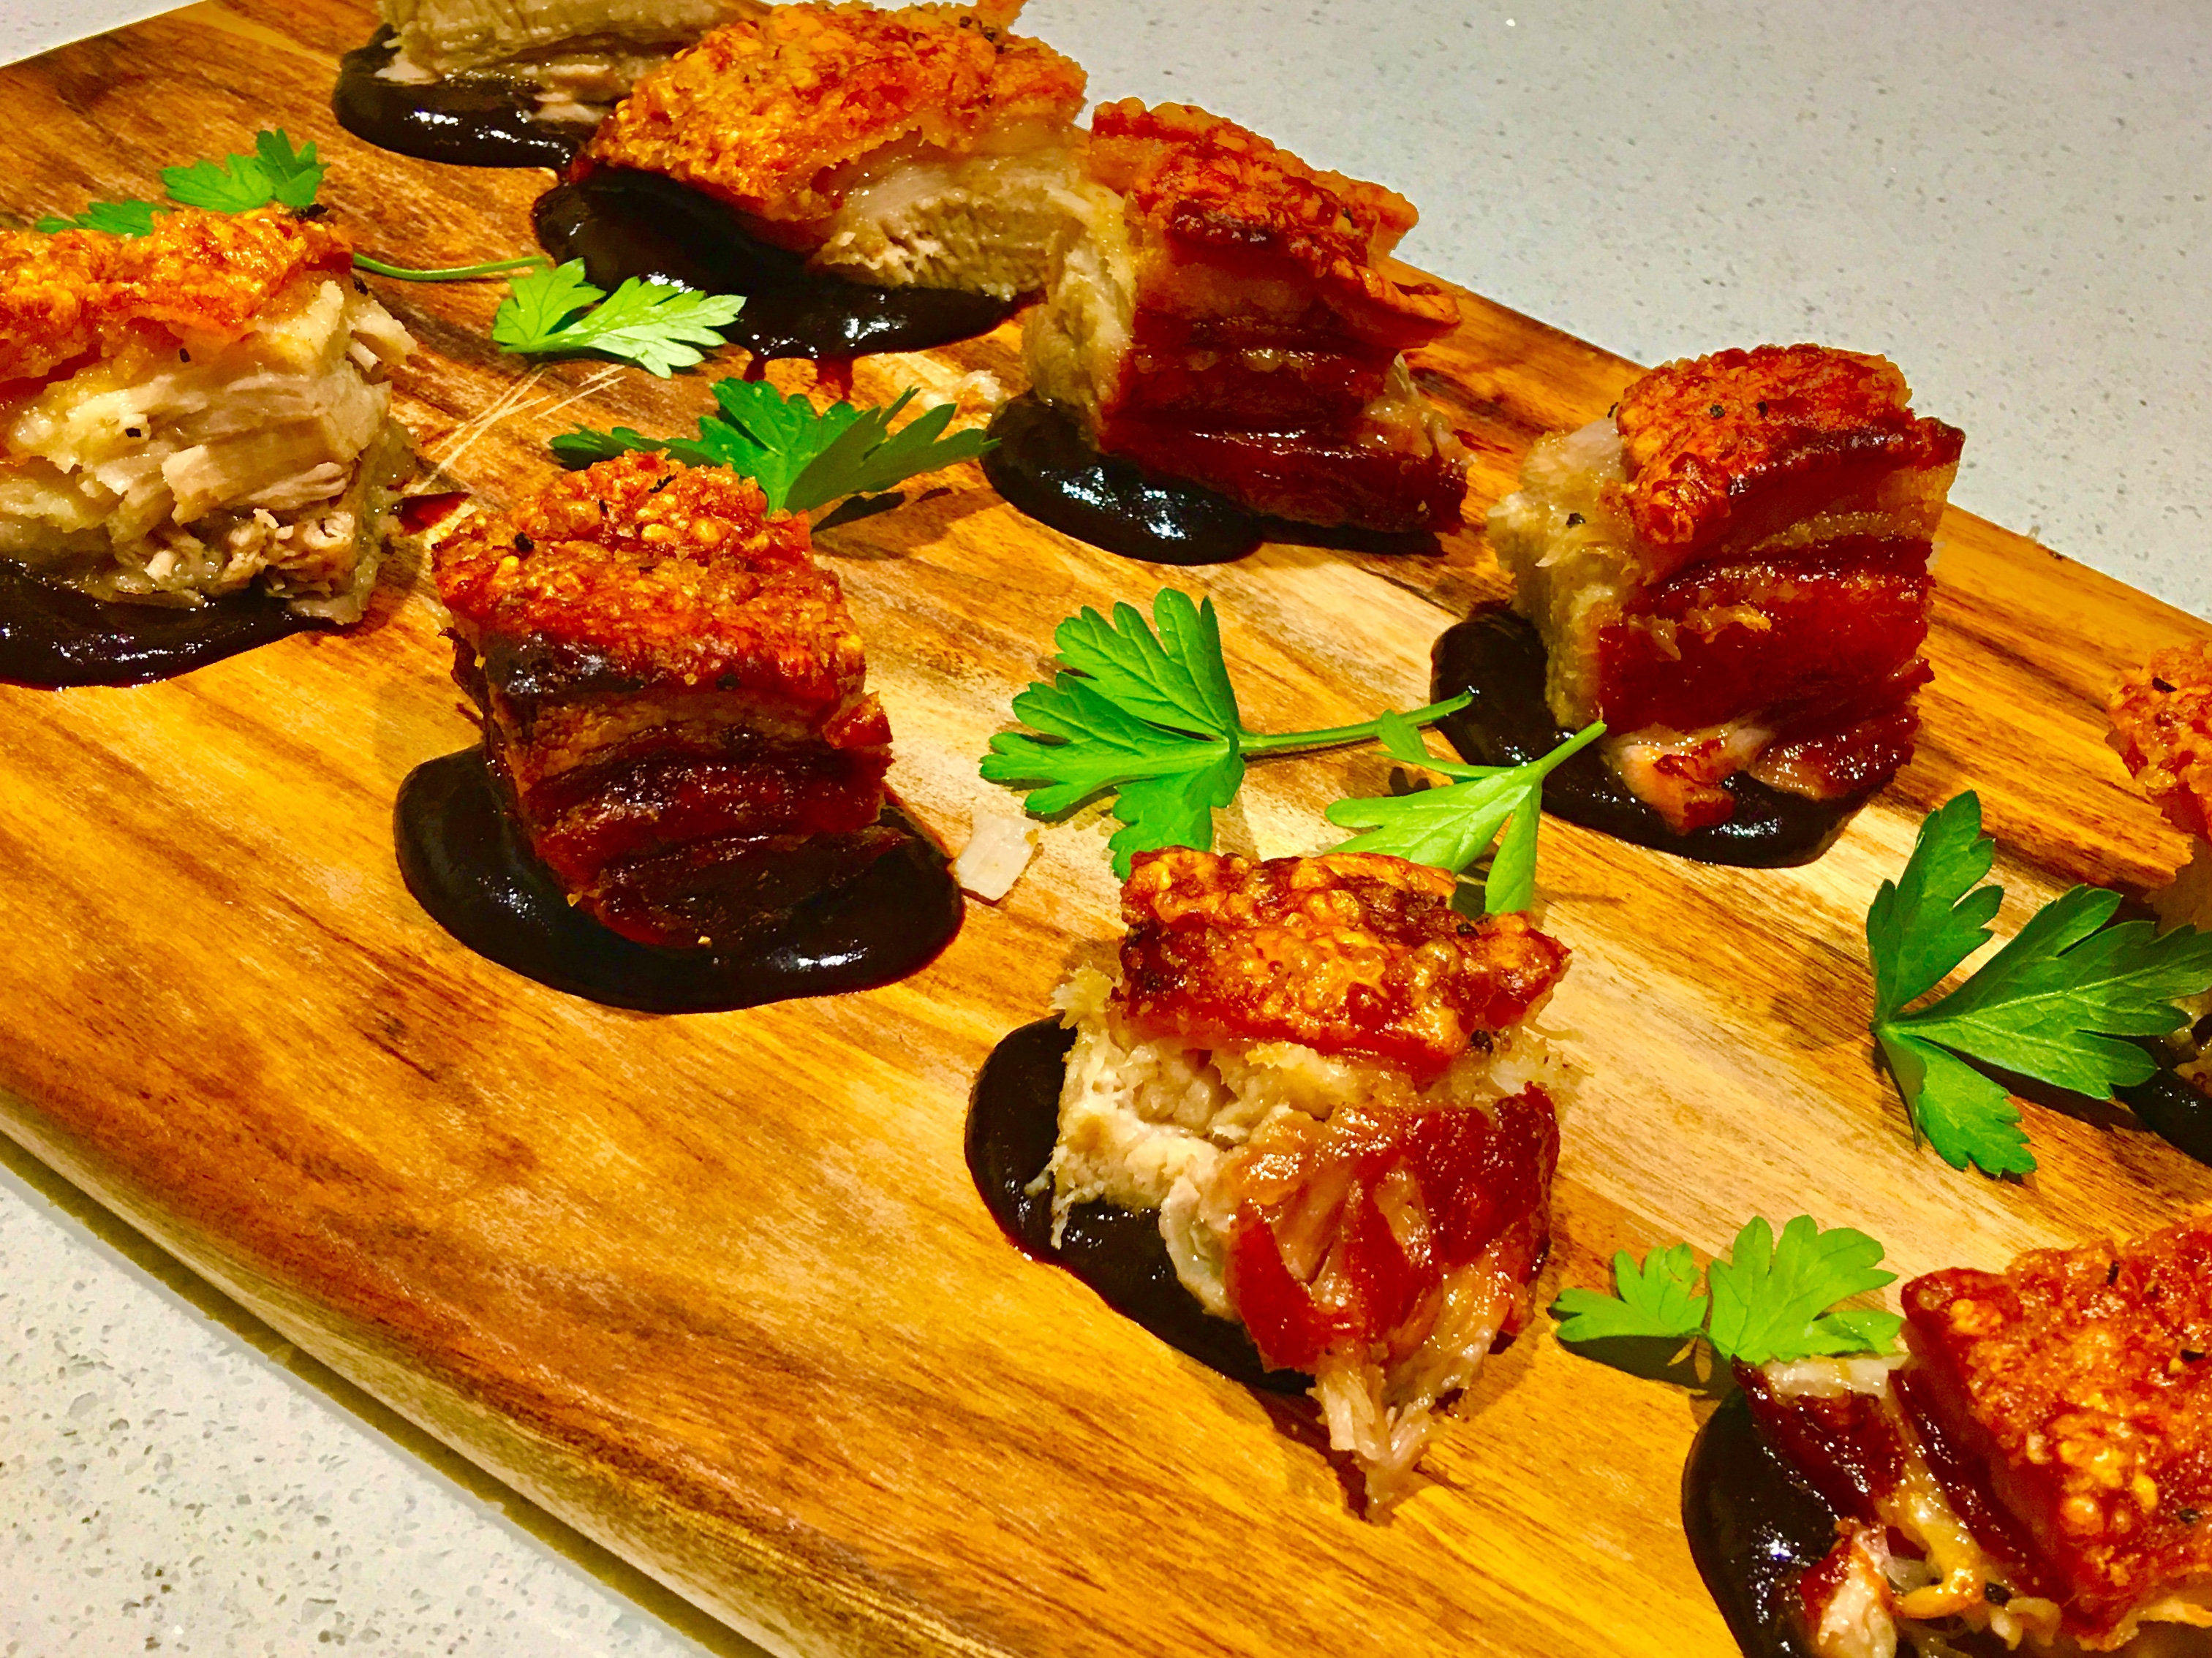 Our Gourmet Pork Belly Platter